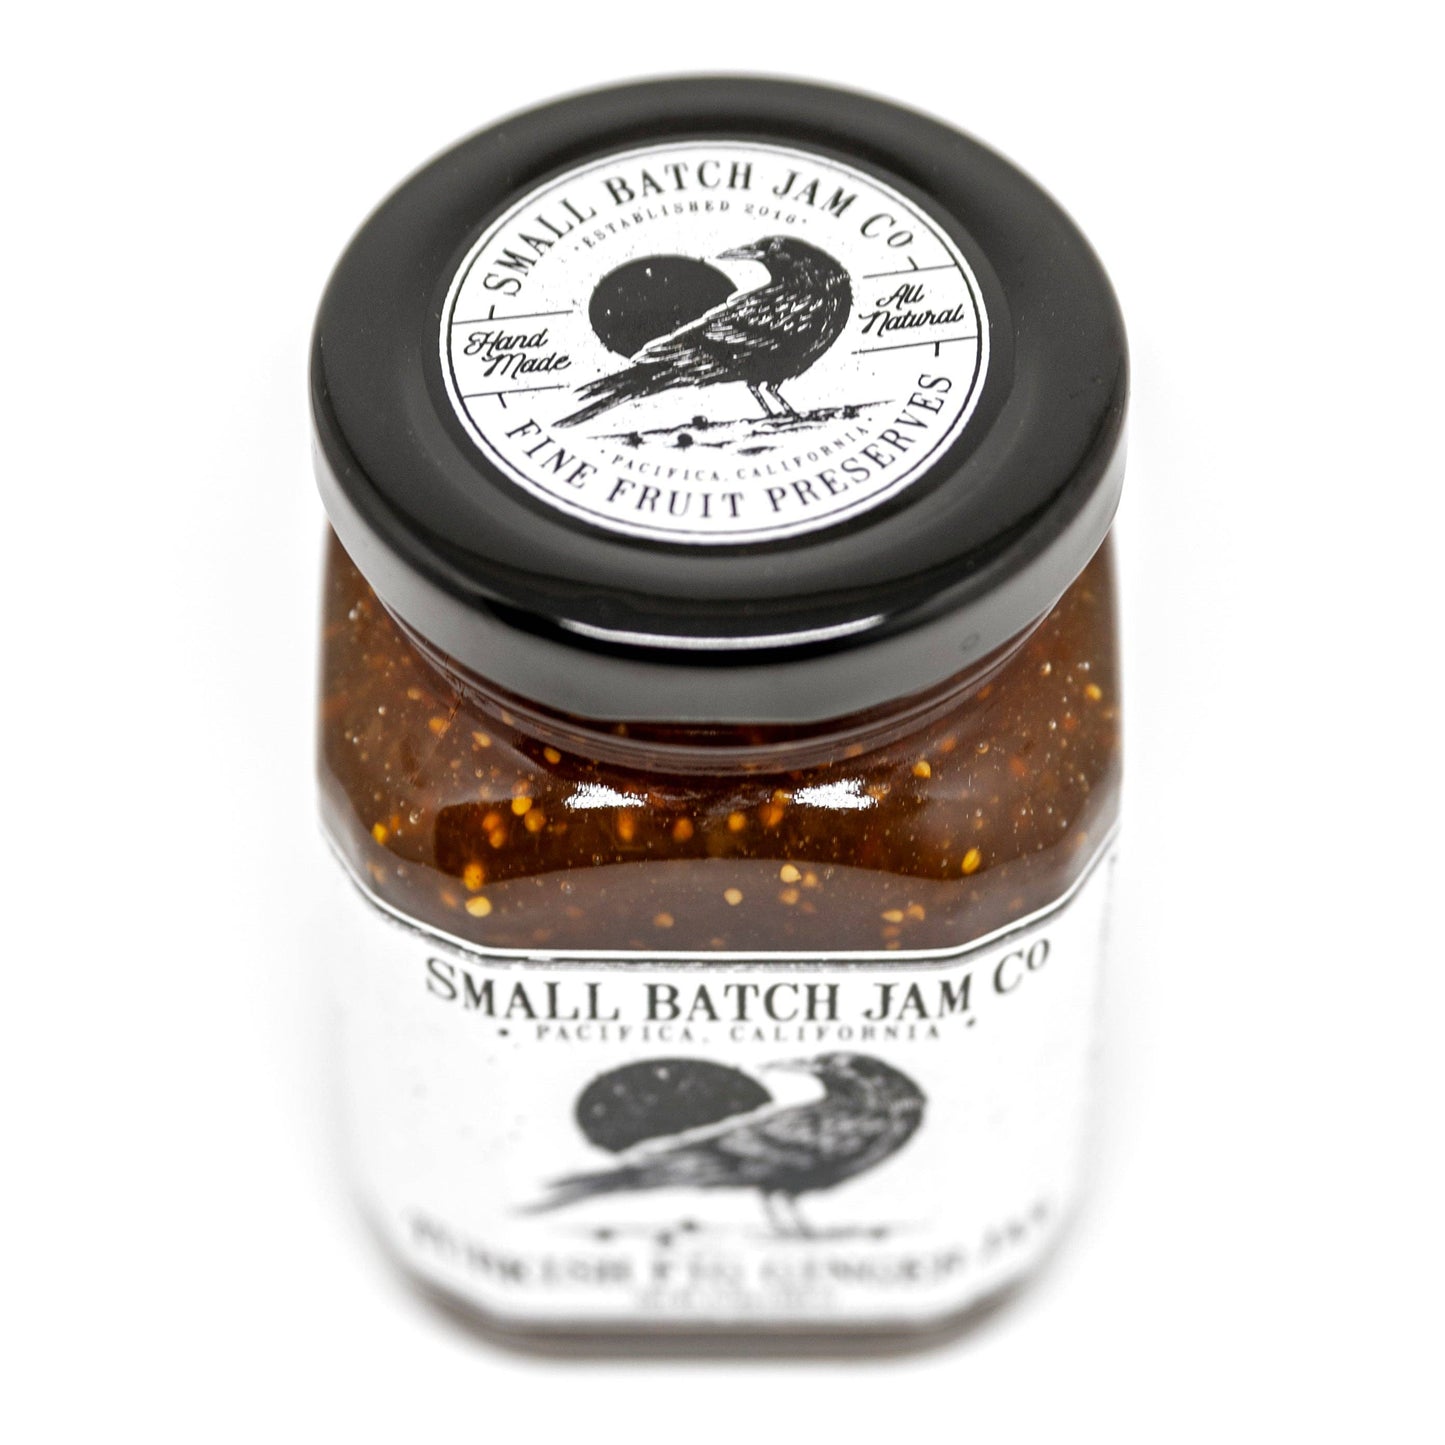 Small Batch Jam Co. Turkish Fig Ginger Jam